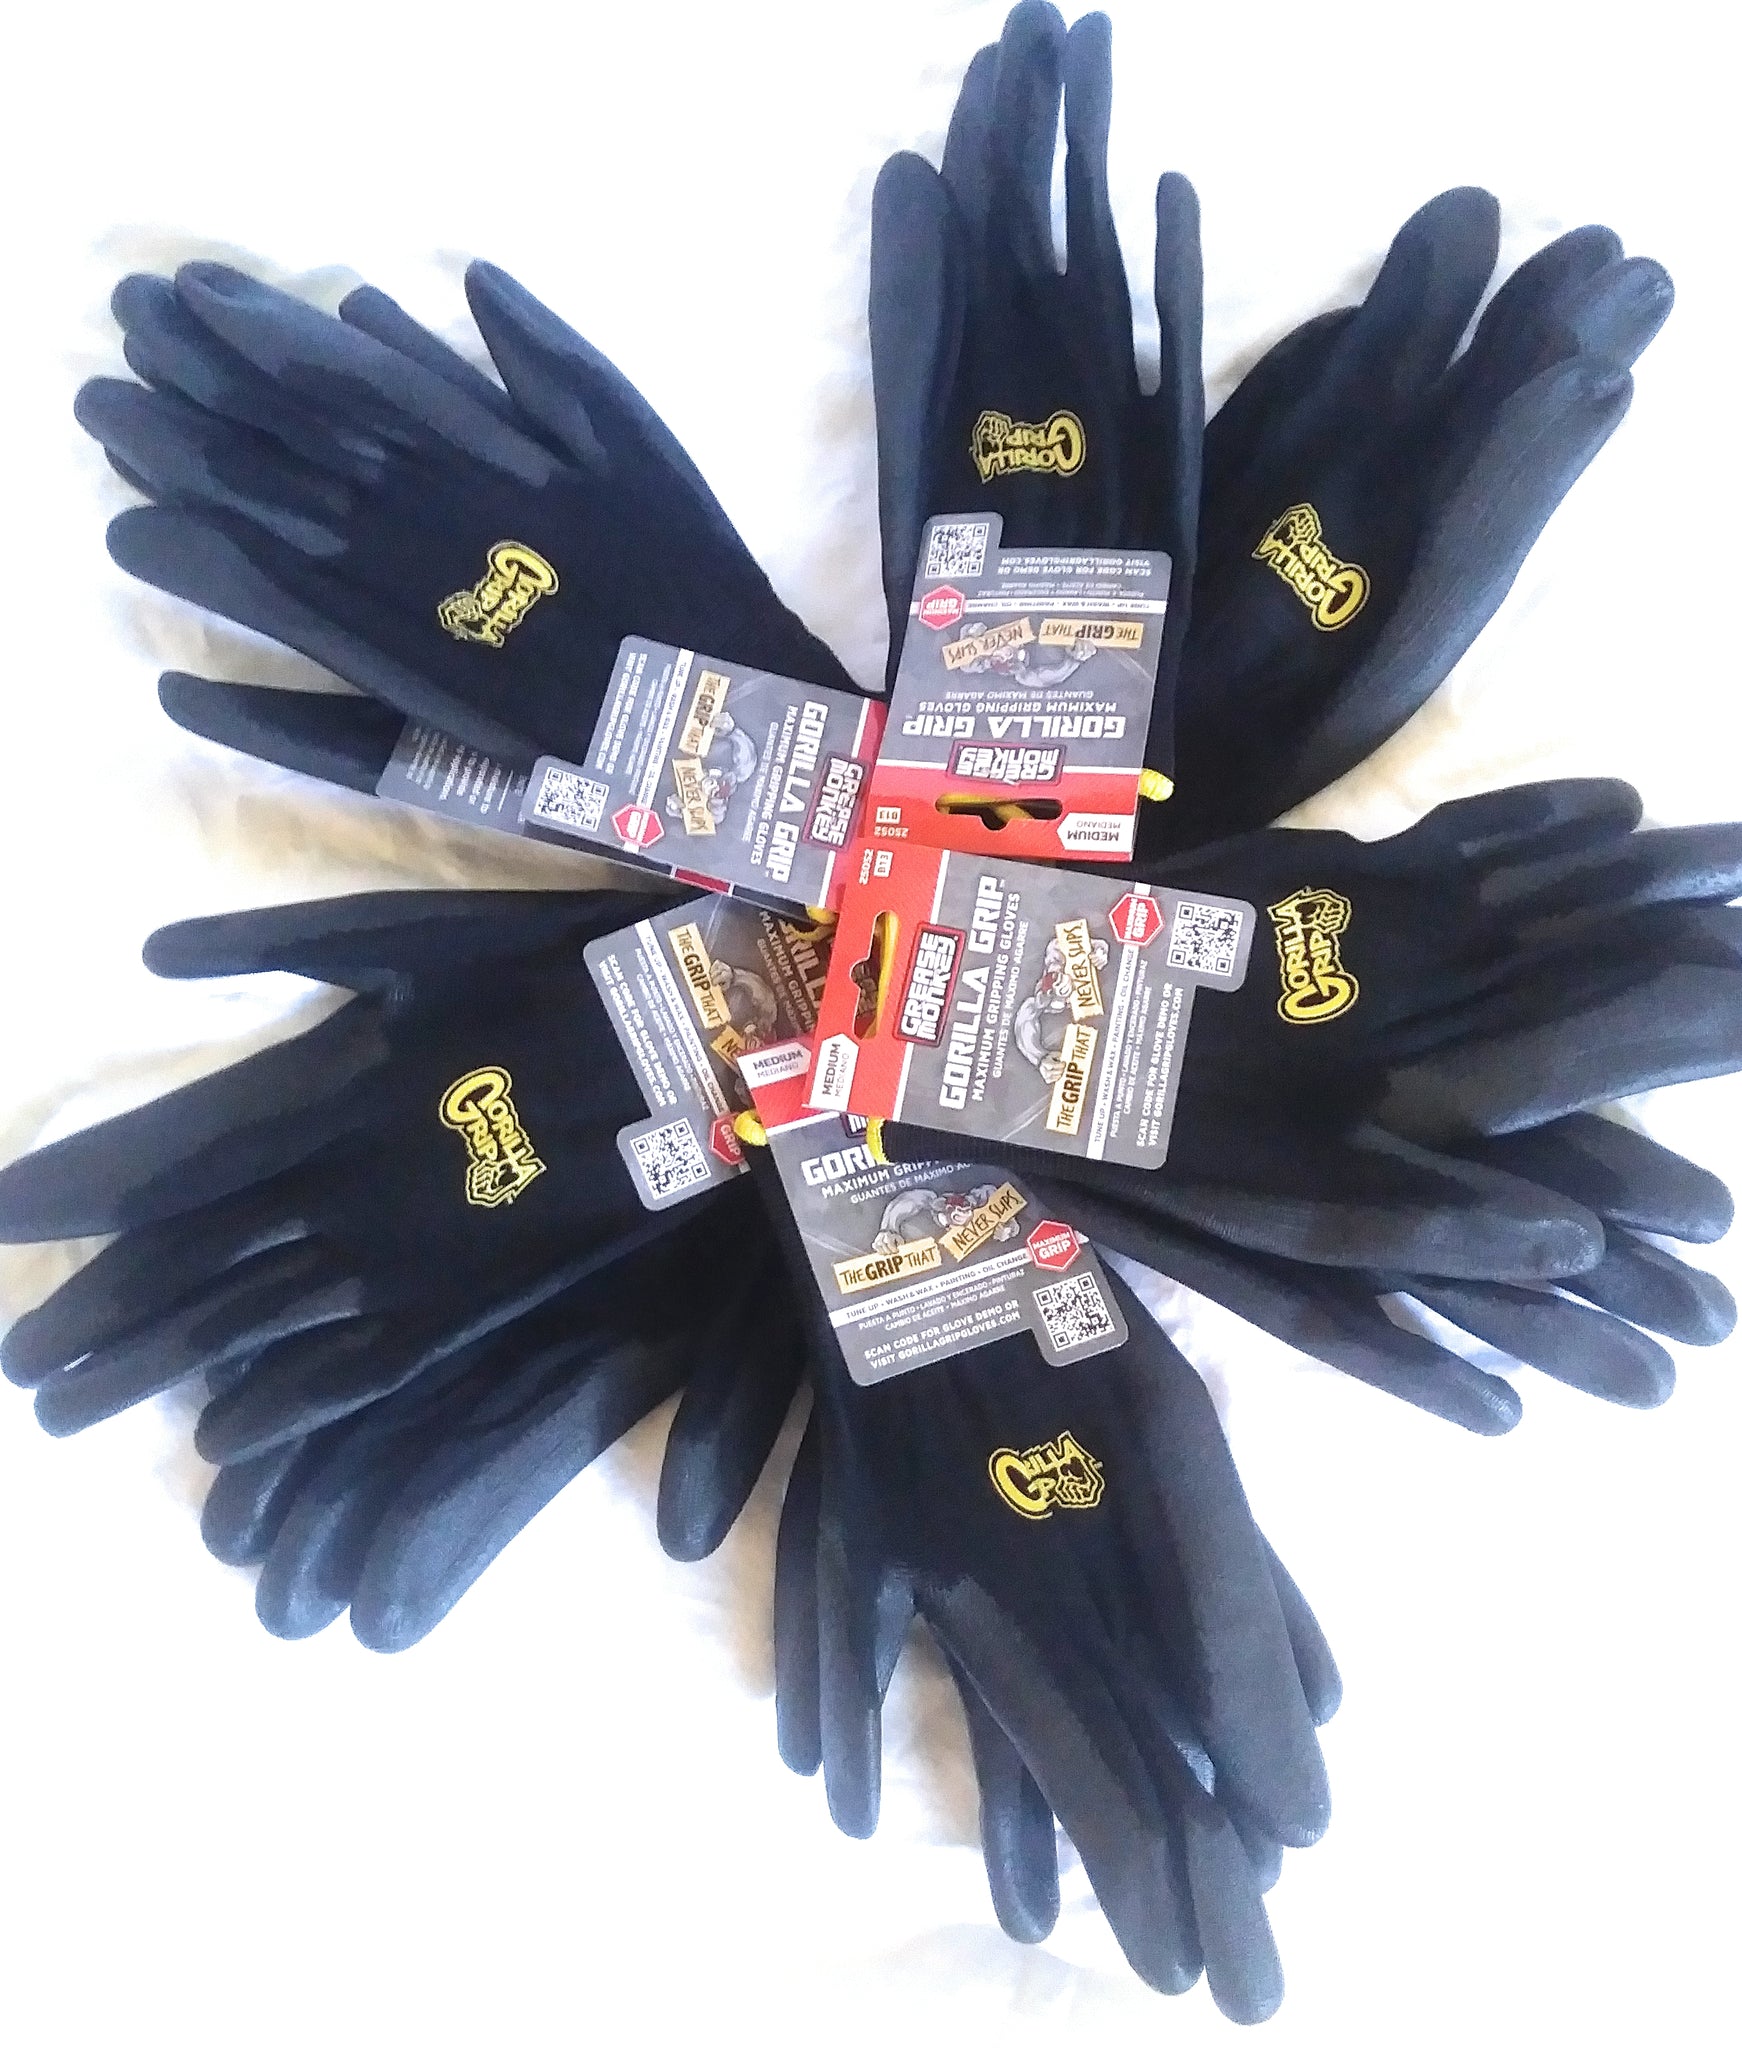 Grease Monkey Gorilla Grip Slip Resistant Gloves 5 Pack, Large, 25057-25 